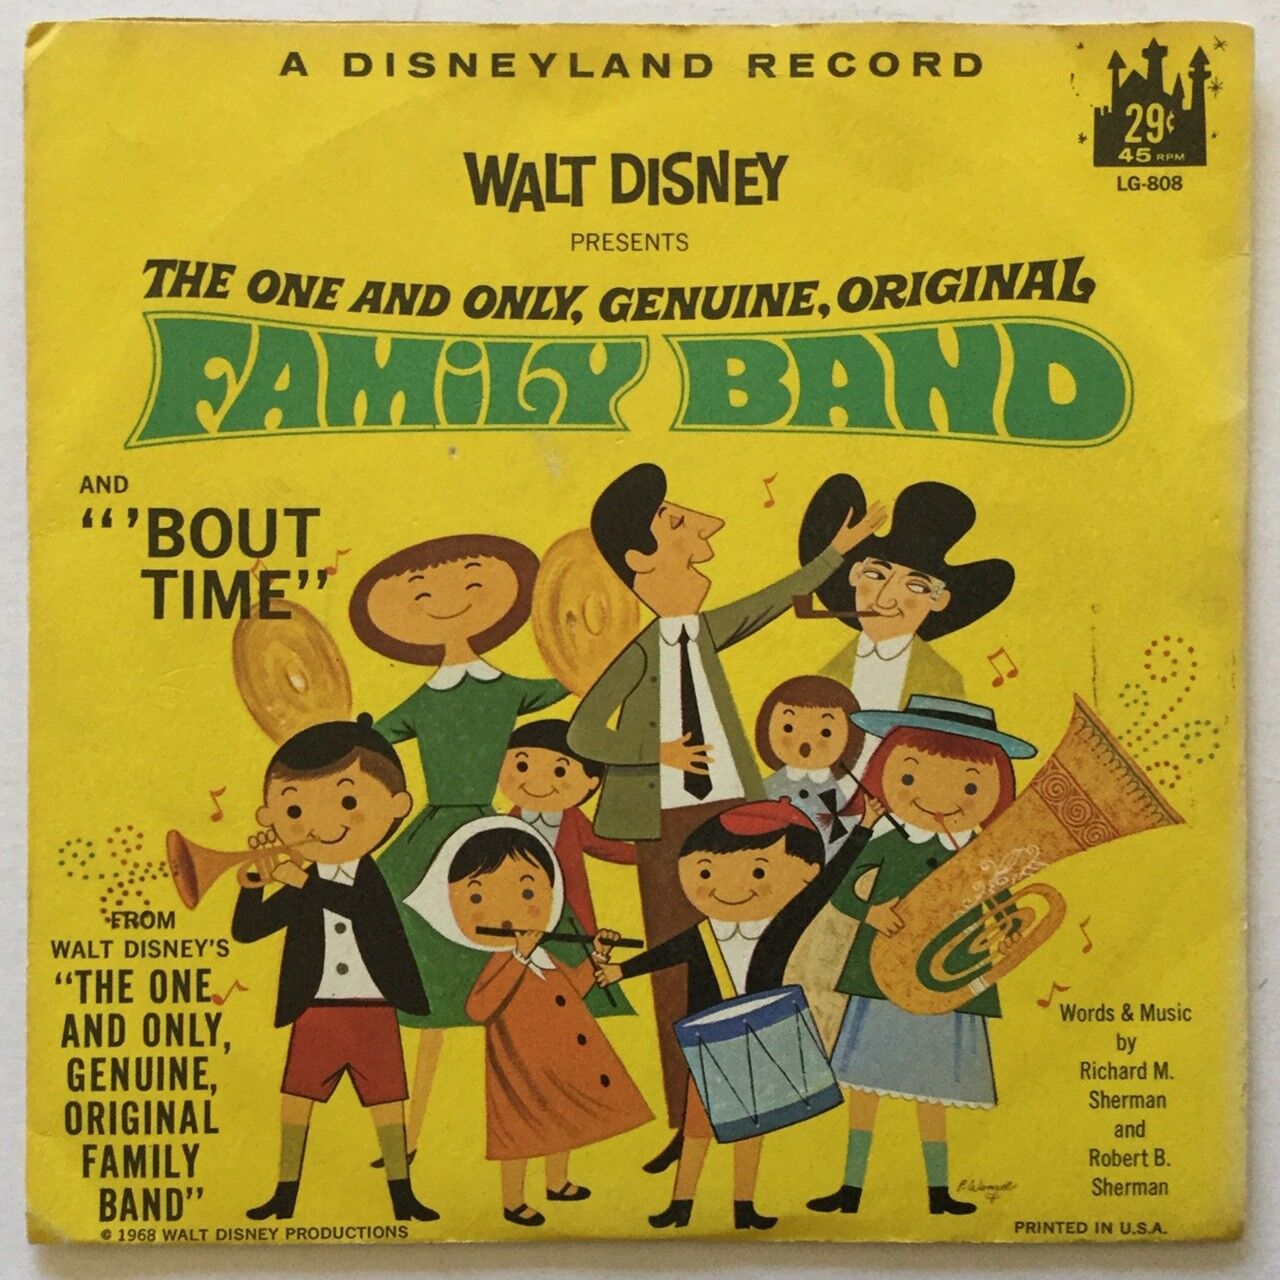 Walt Disney Record ONE & ONLY GENUINE, ORIGINAL, FAMILY BAND Disneyland LG-808